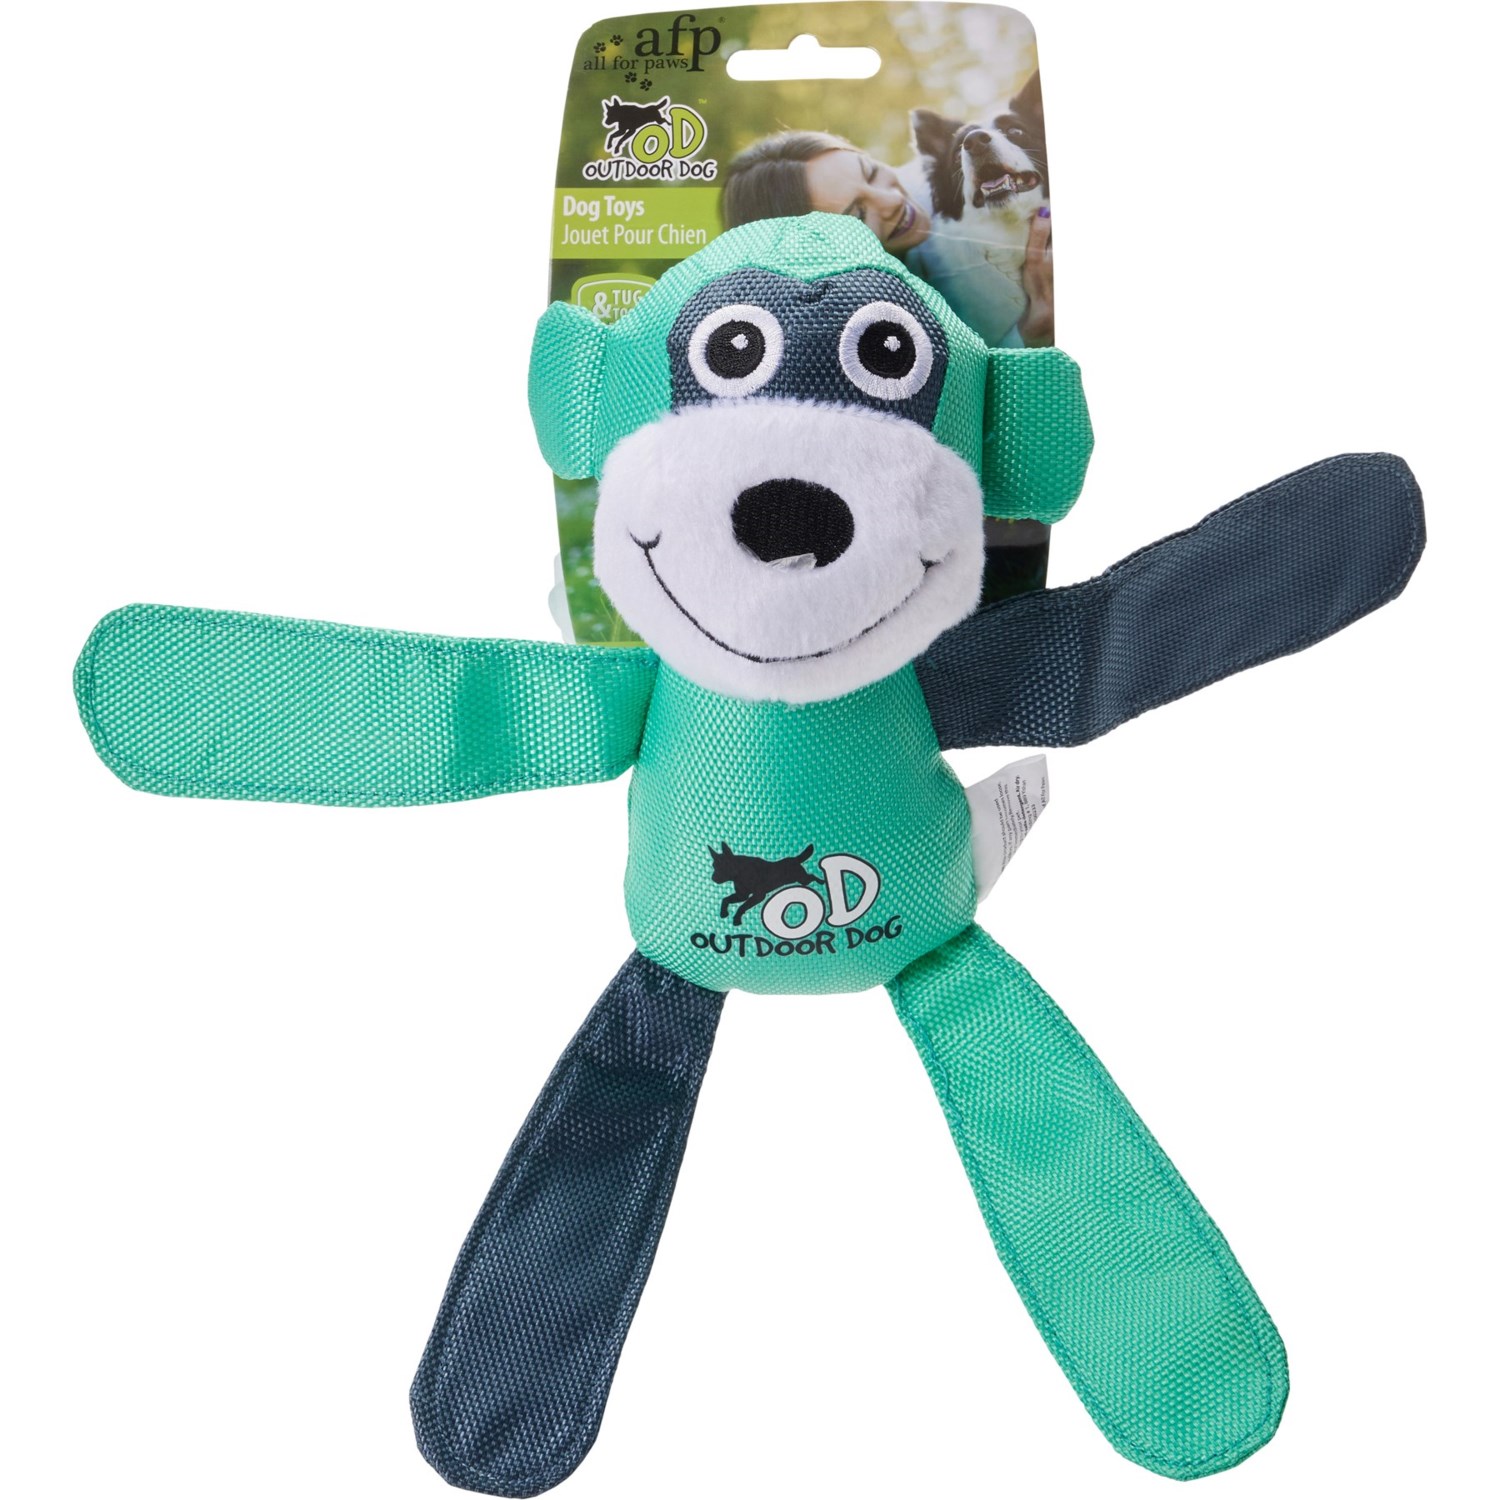 Outdoor Dog Ballistic Dog Toy - 12”, Squeaker - Save 25%